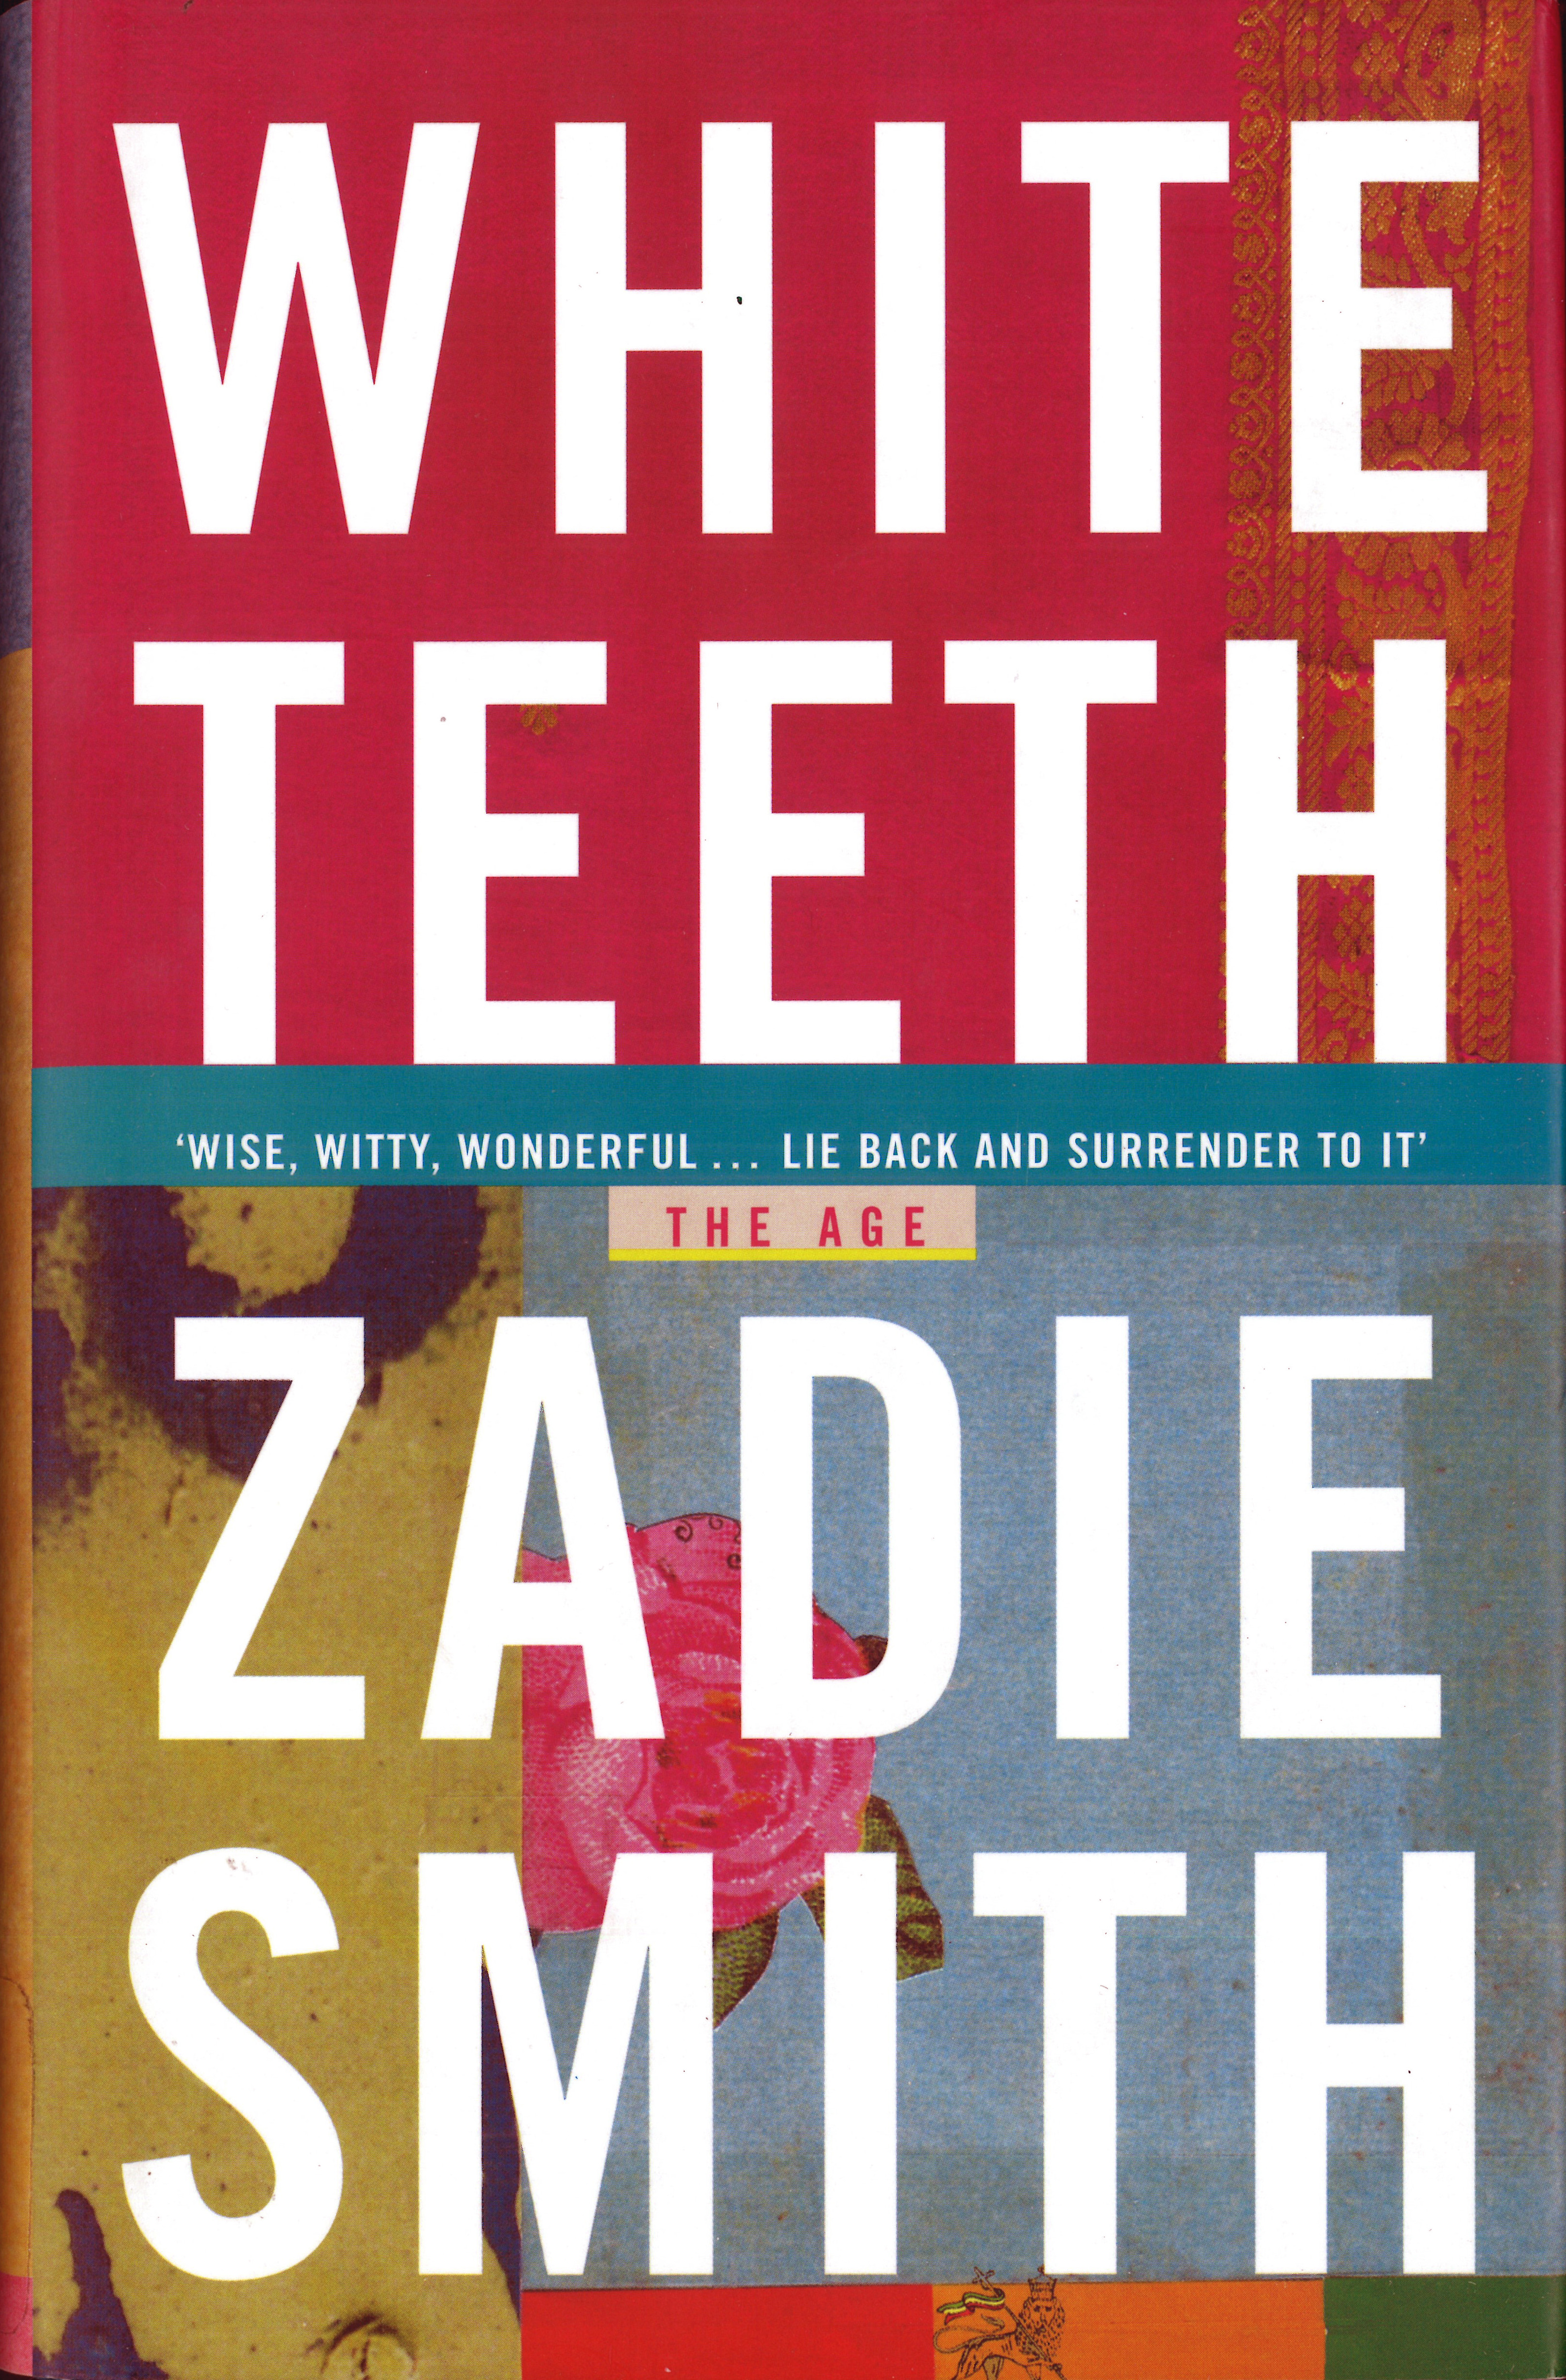 White Teeth by Zadie Smith, Hamish Hamilton 2000